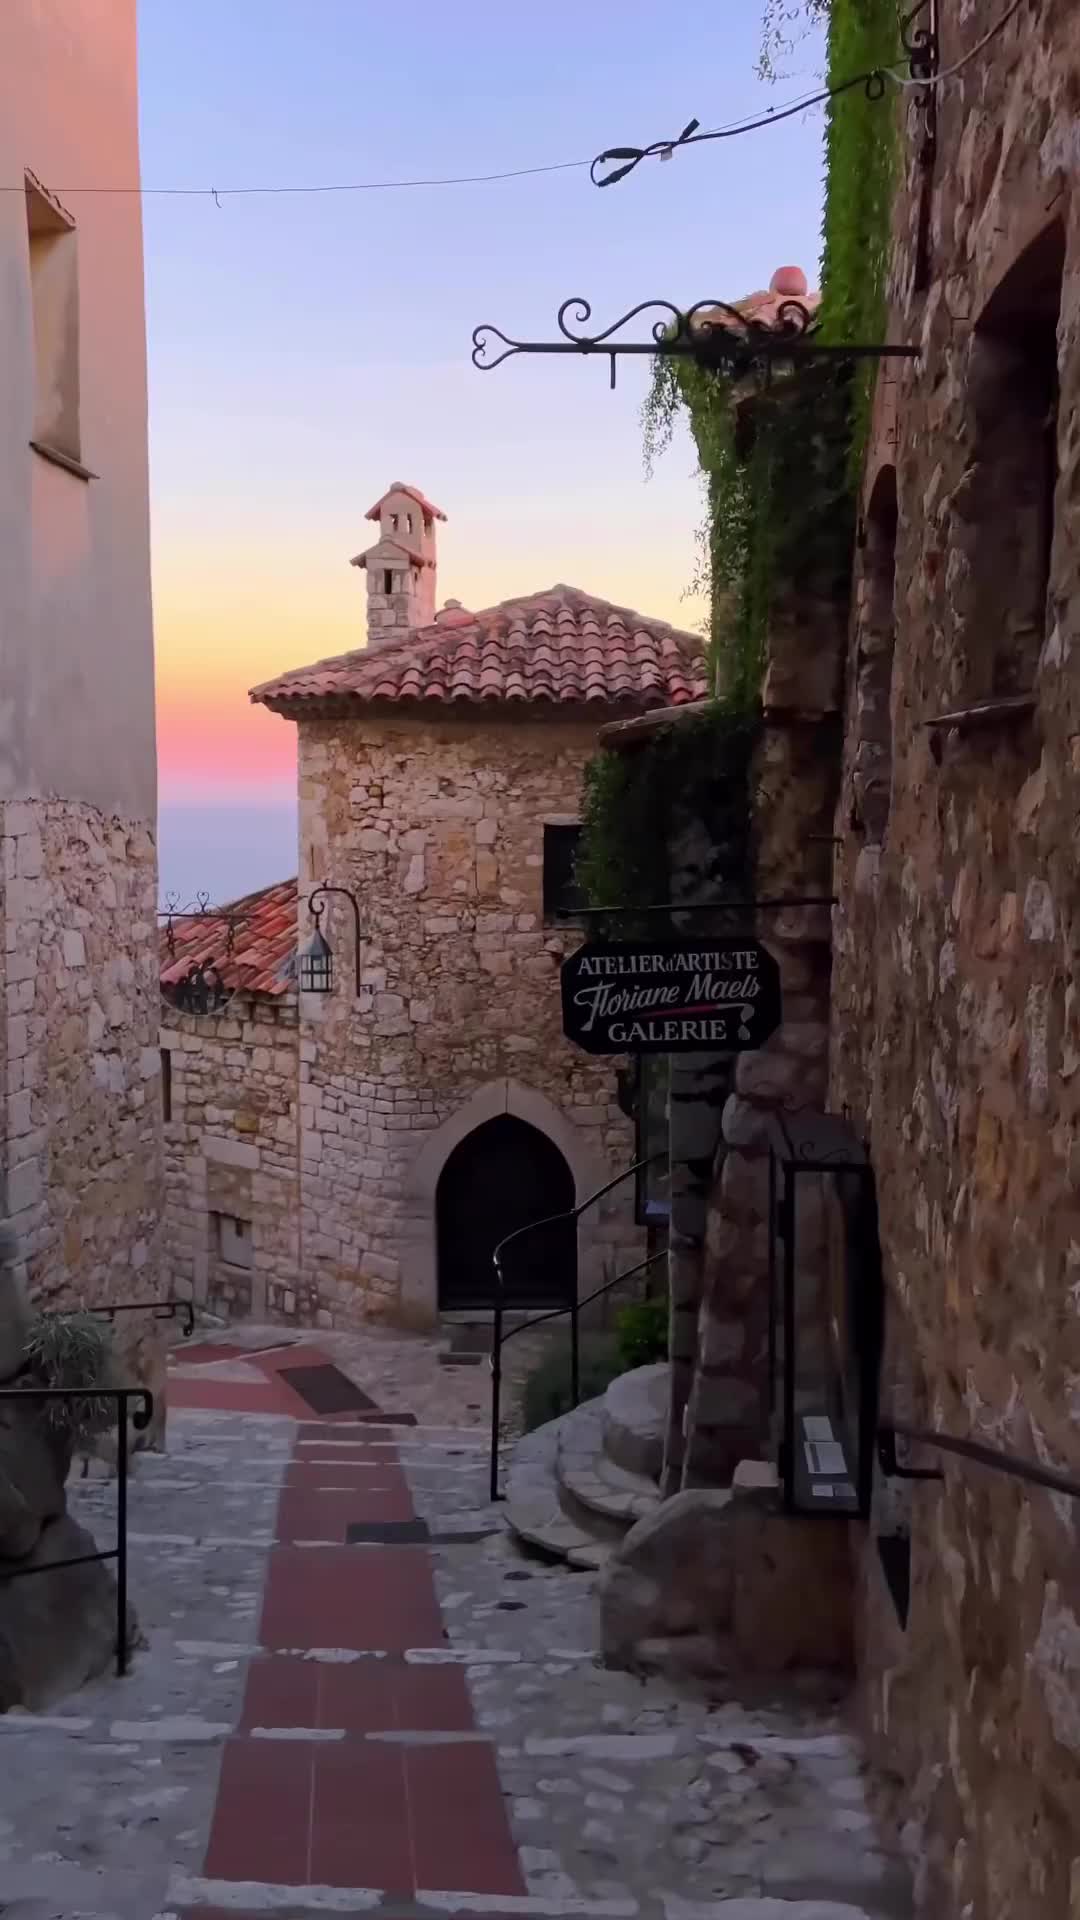 End of Day in Èze Village, Côte d’Azur 🇫🇷